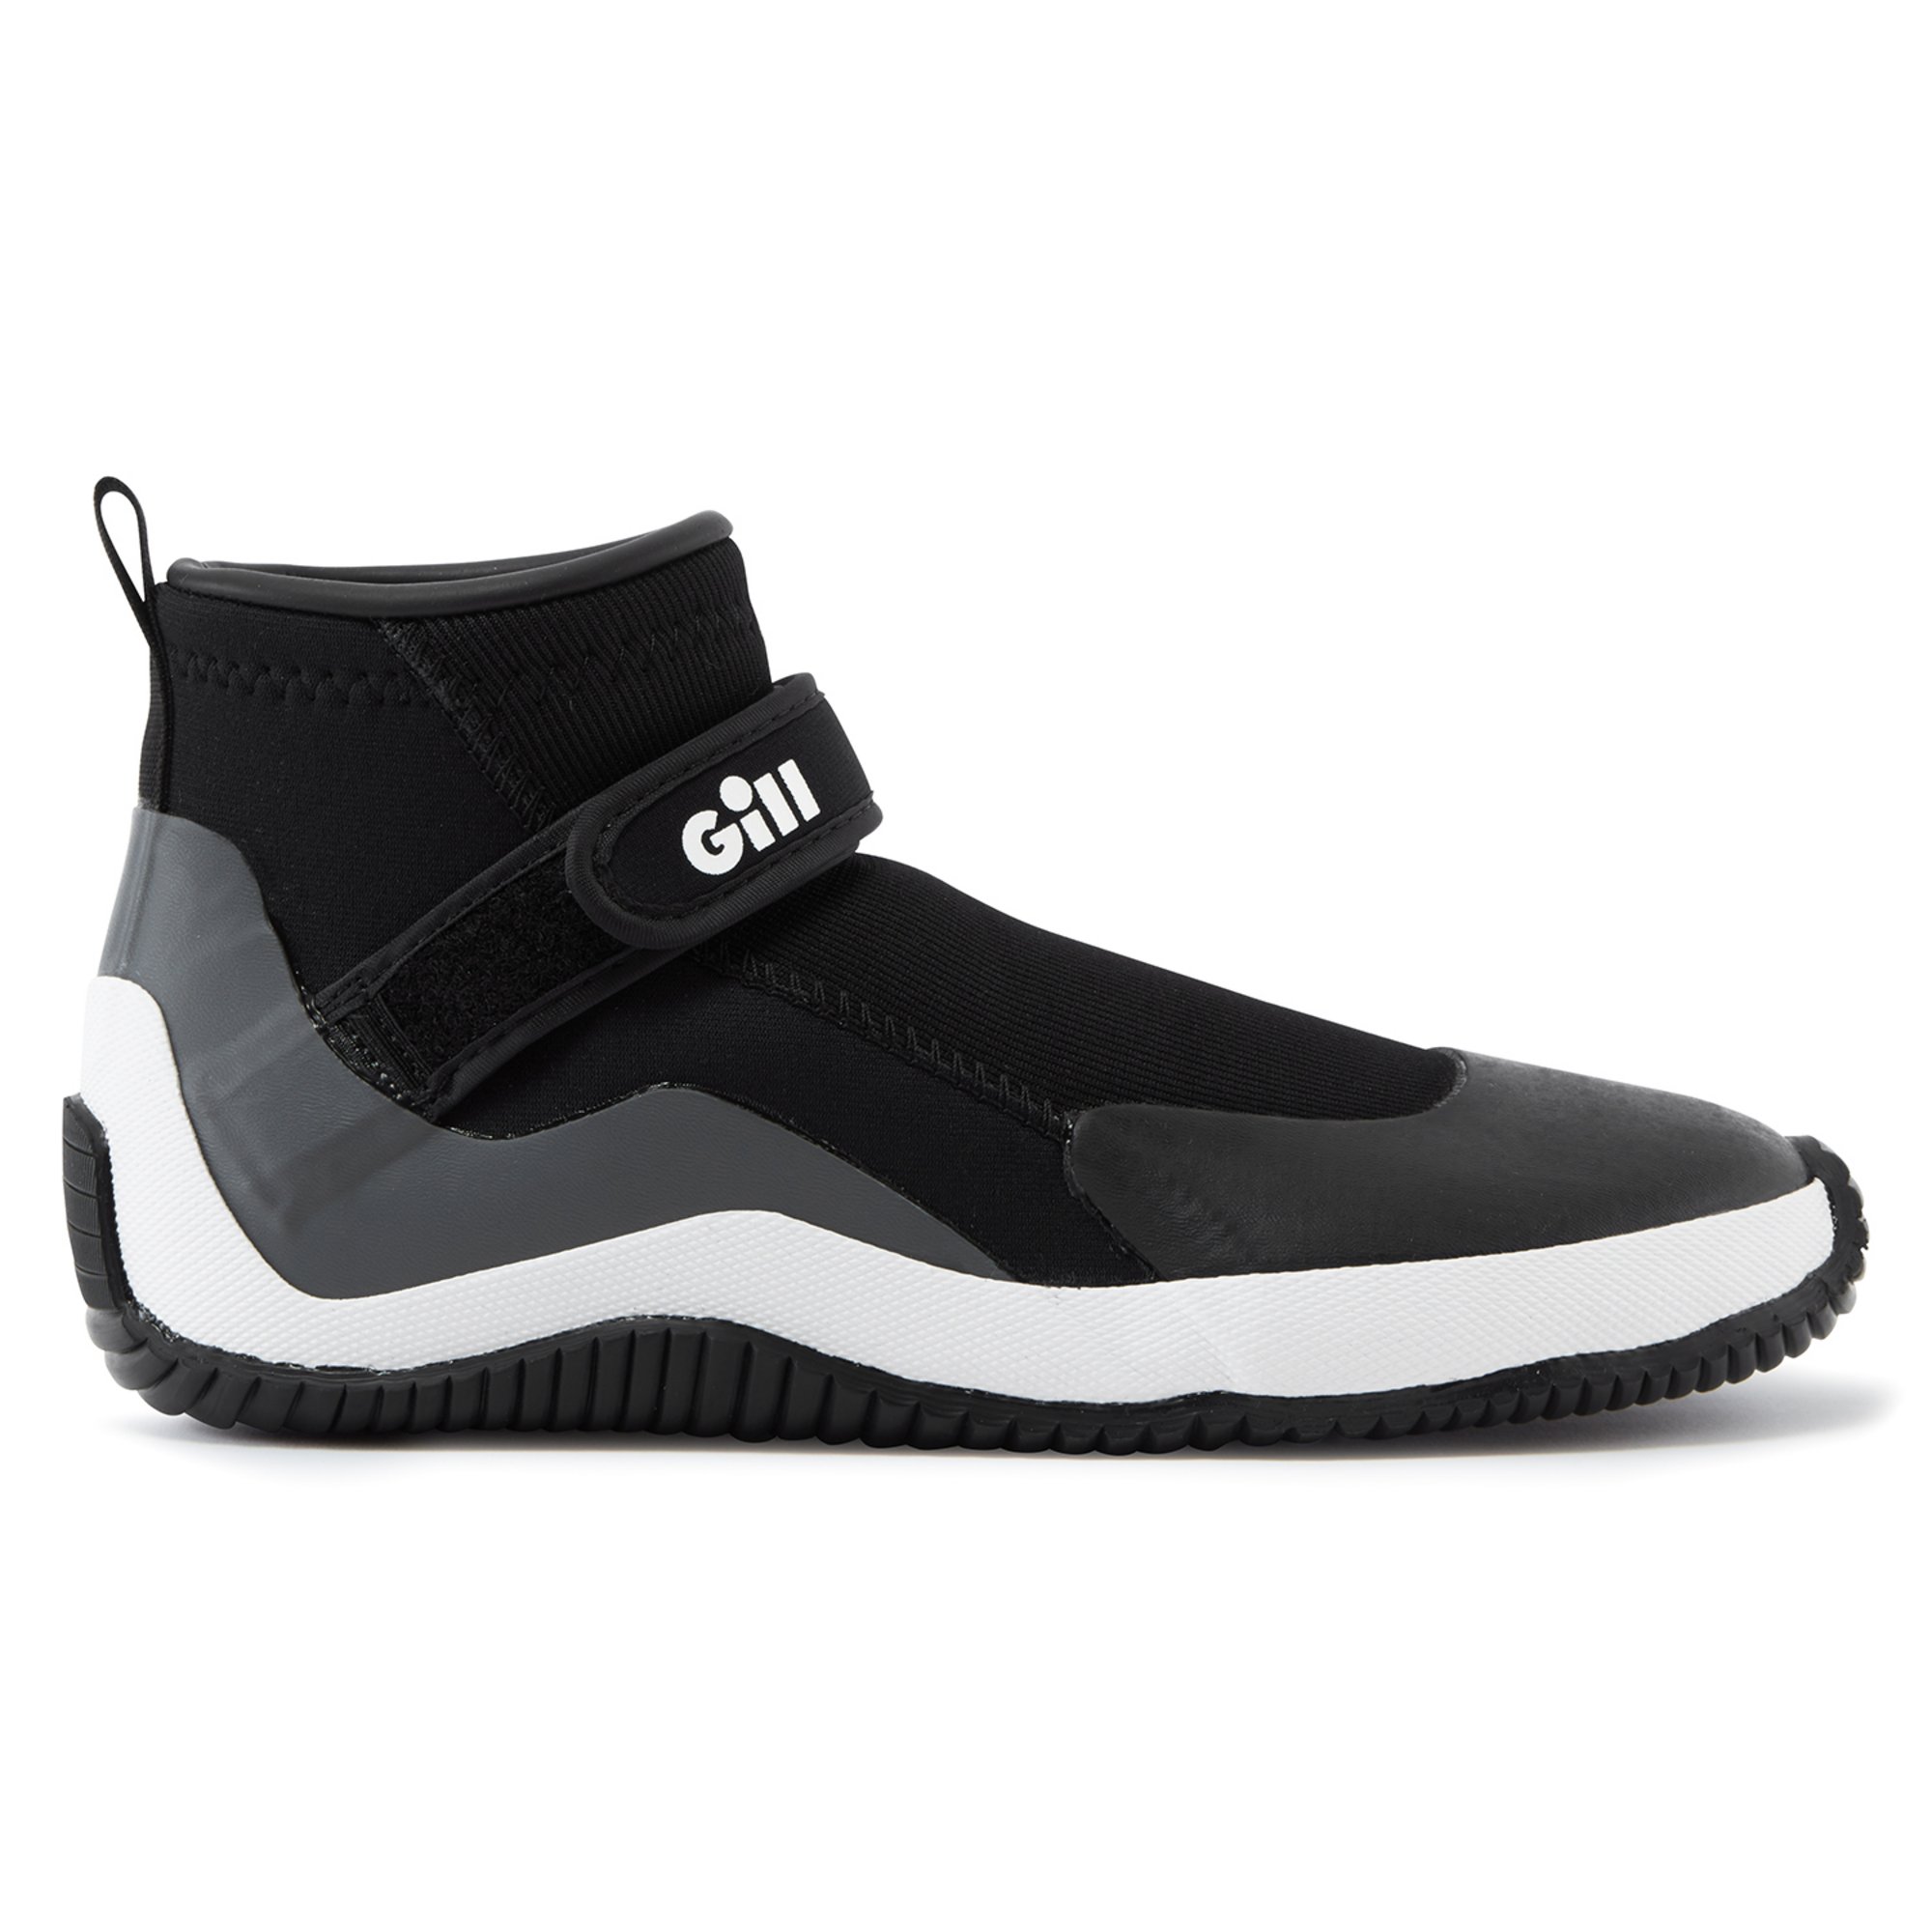 【NEW】GILLギル 964 Aquatech Shoe 2023